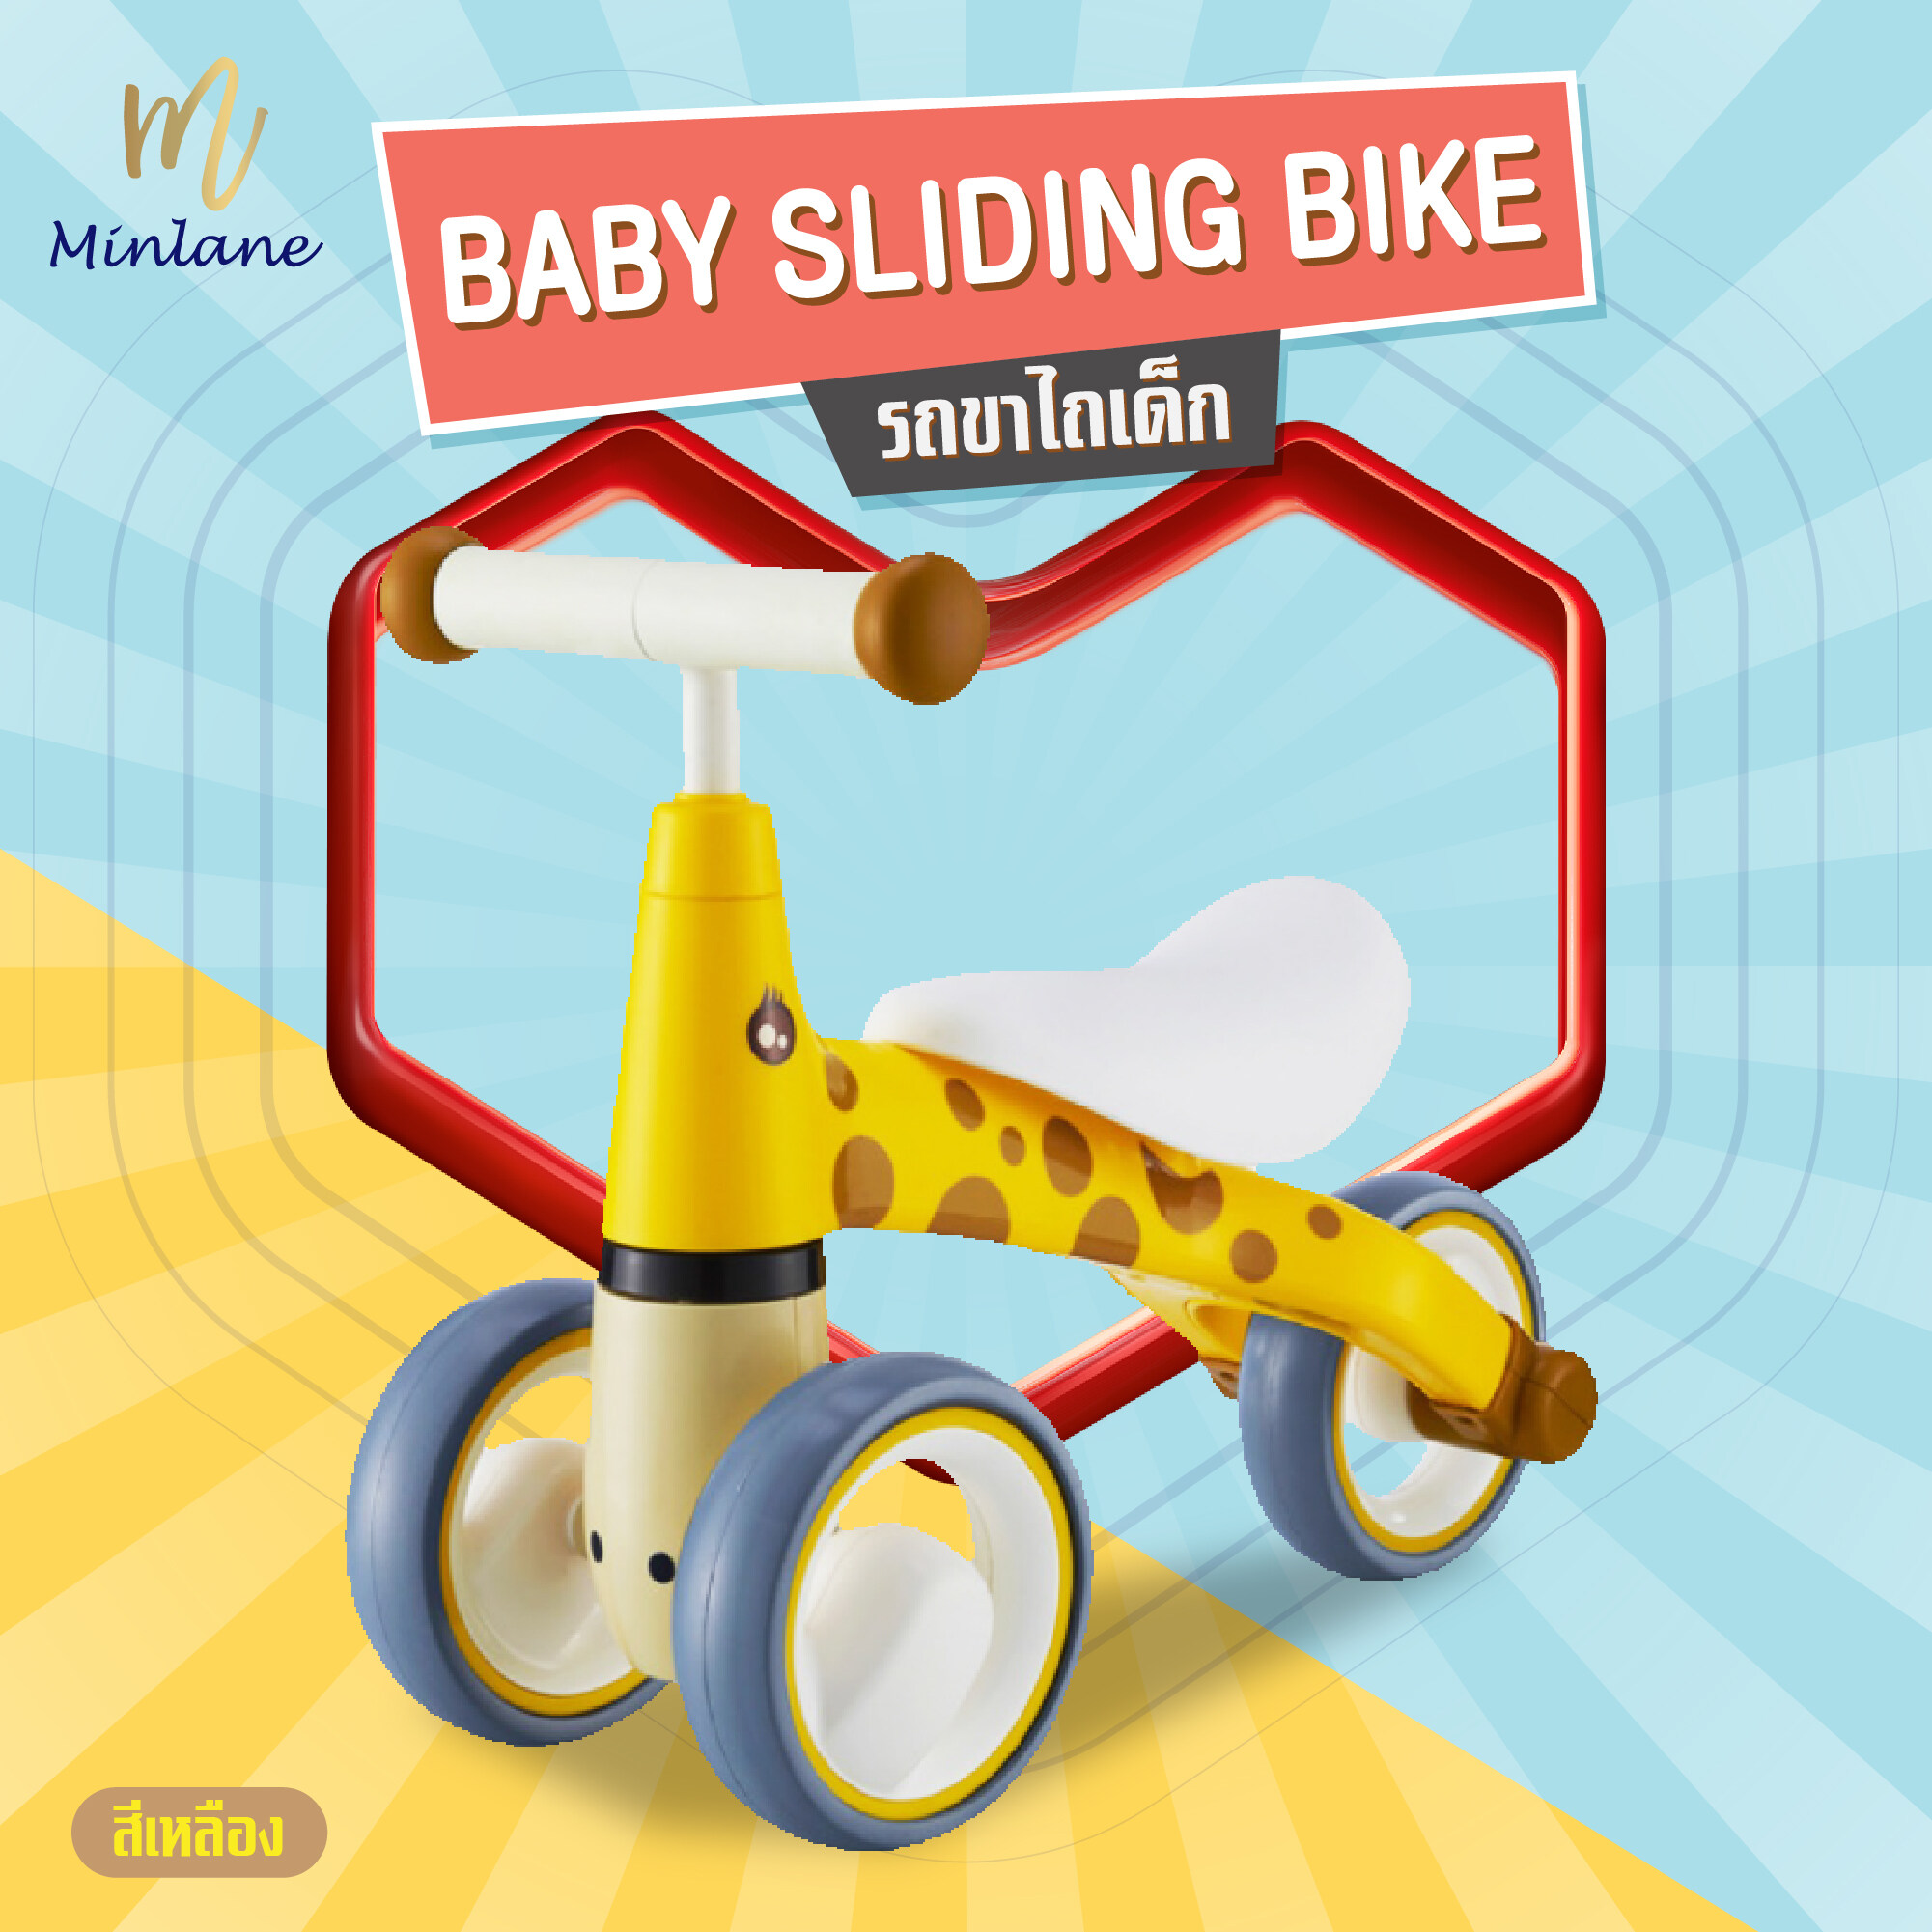 Minlane baby sliding bike รถขาไถเด็ก